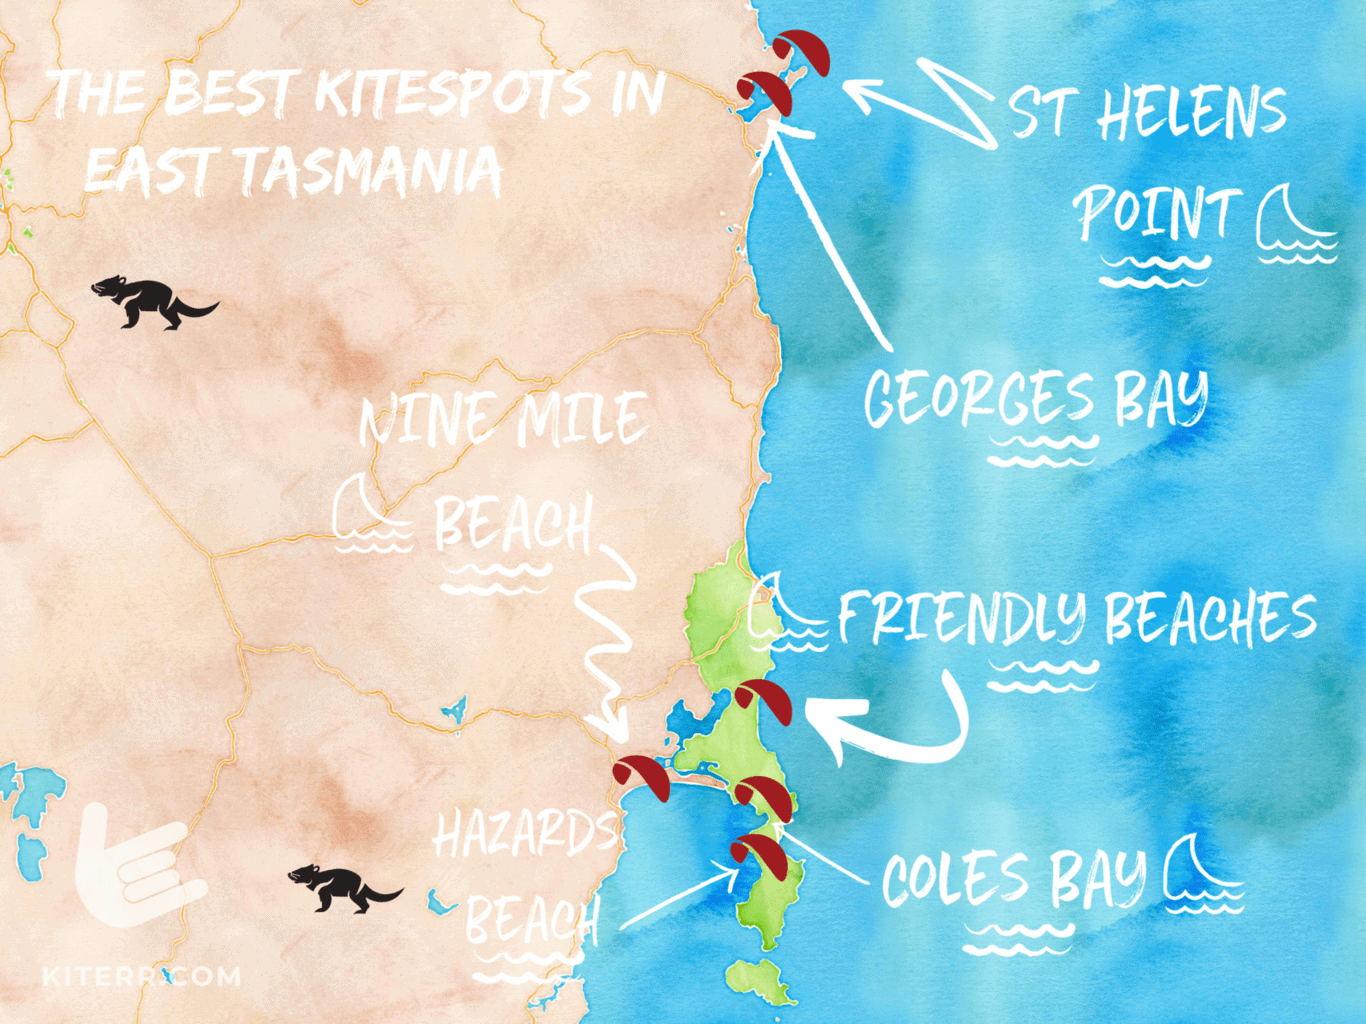 Best kitesurfing spots in East Tasmania // Kiterr.com